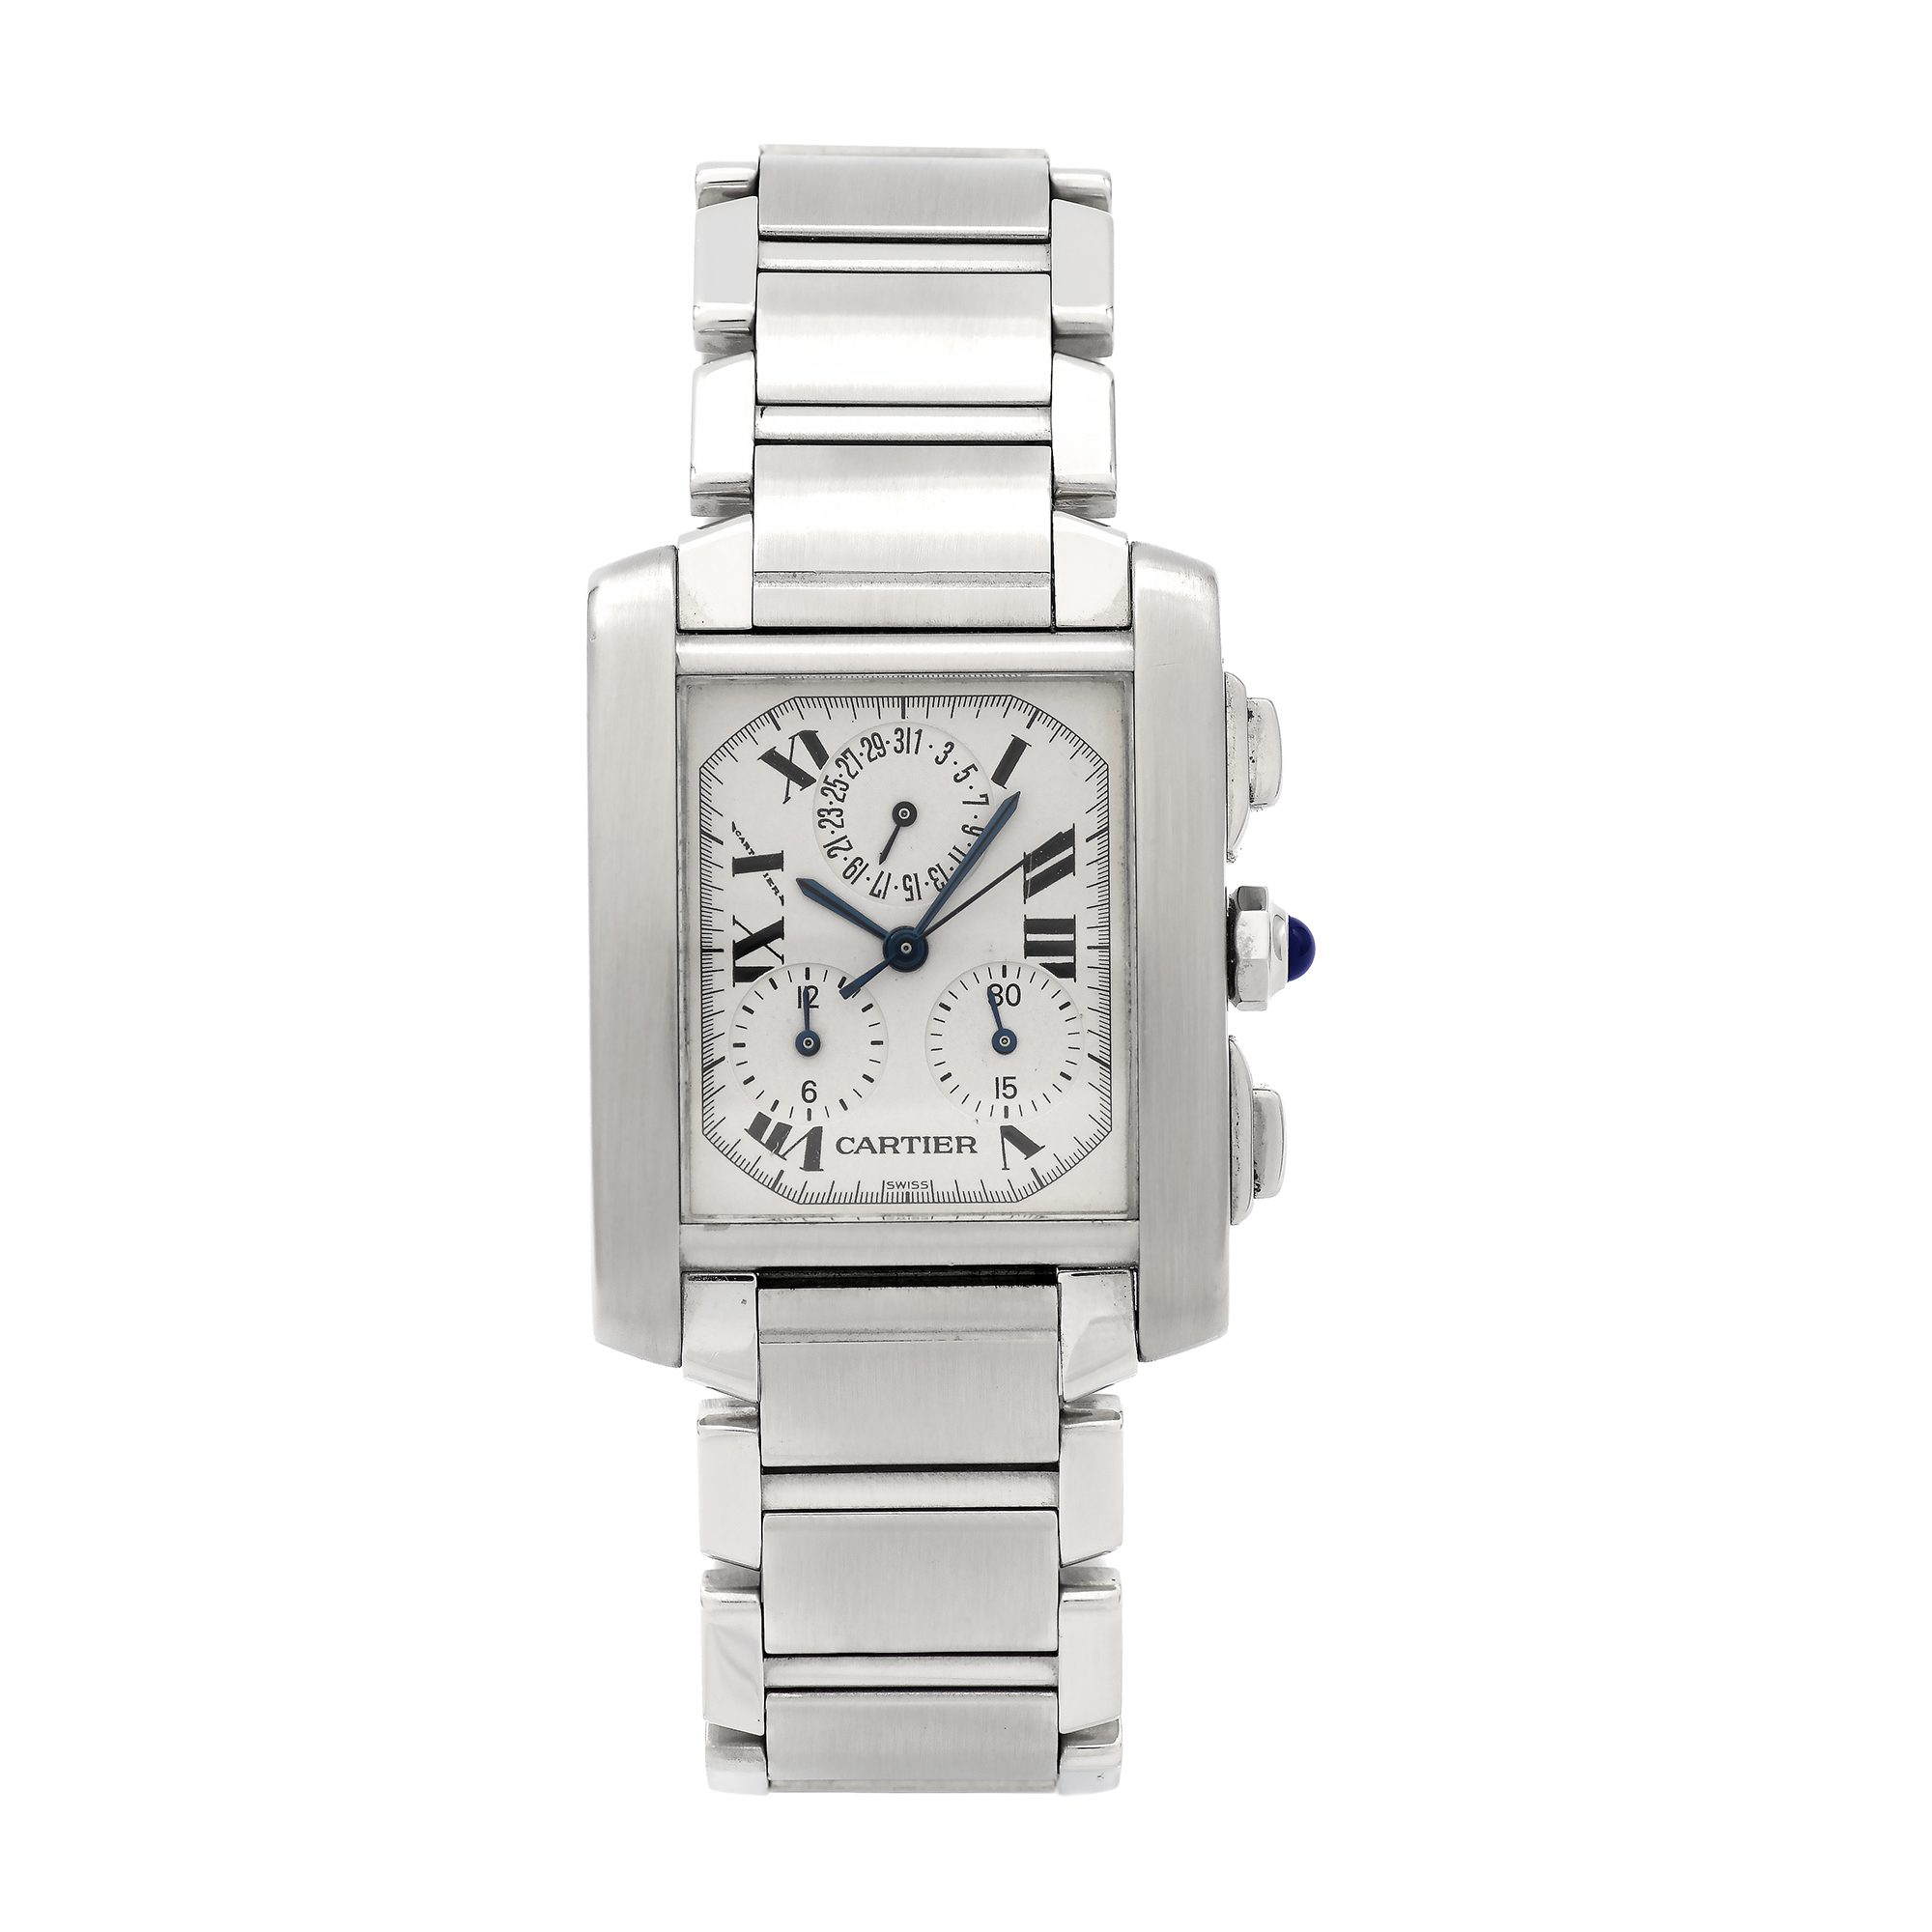 Cartier Steel Tank Francaise 2303 Quartz Chronograph Wrist Watch | eBay